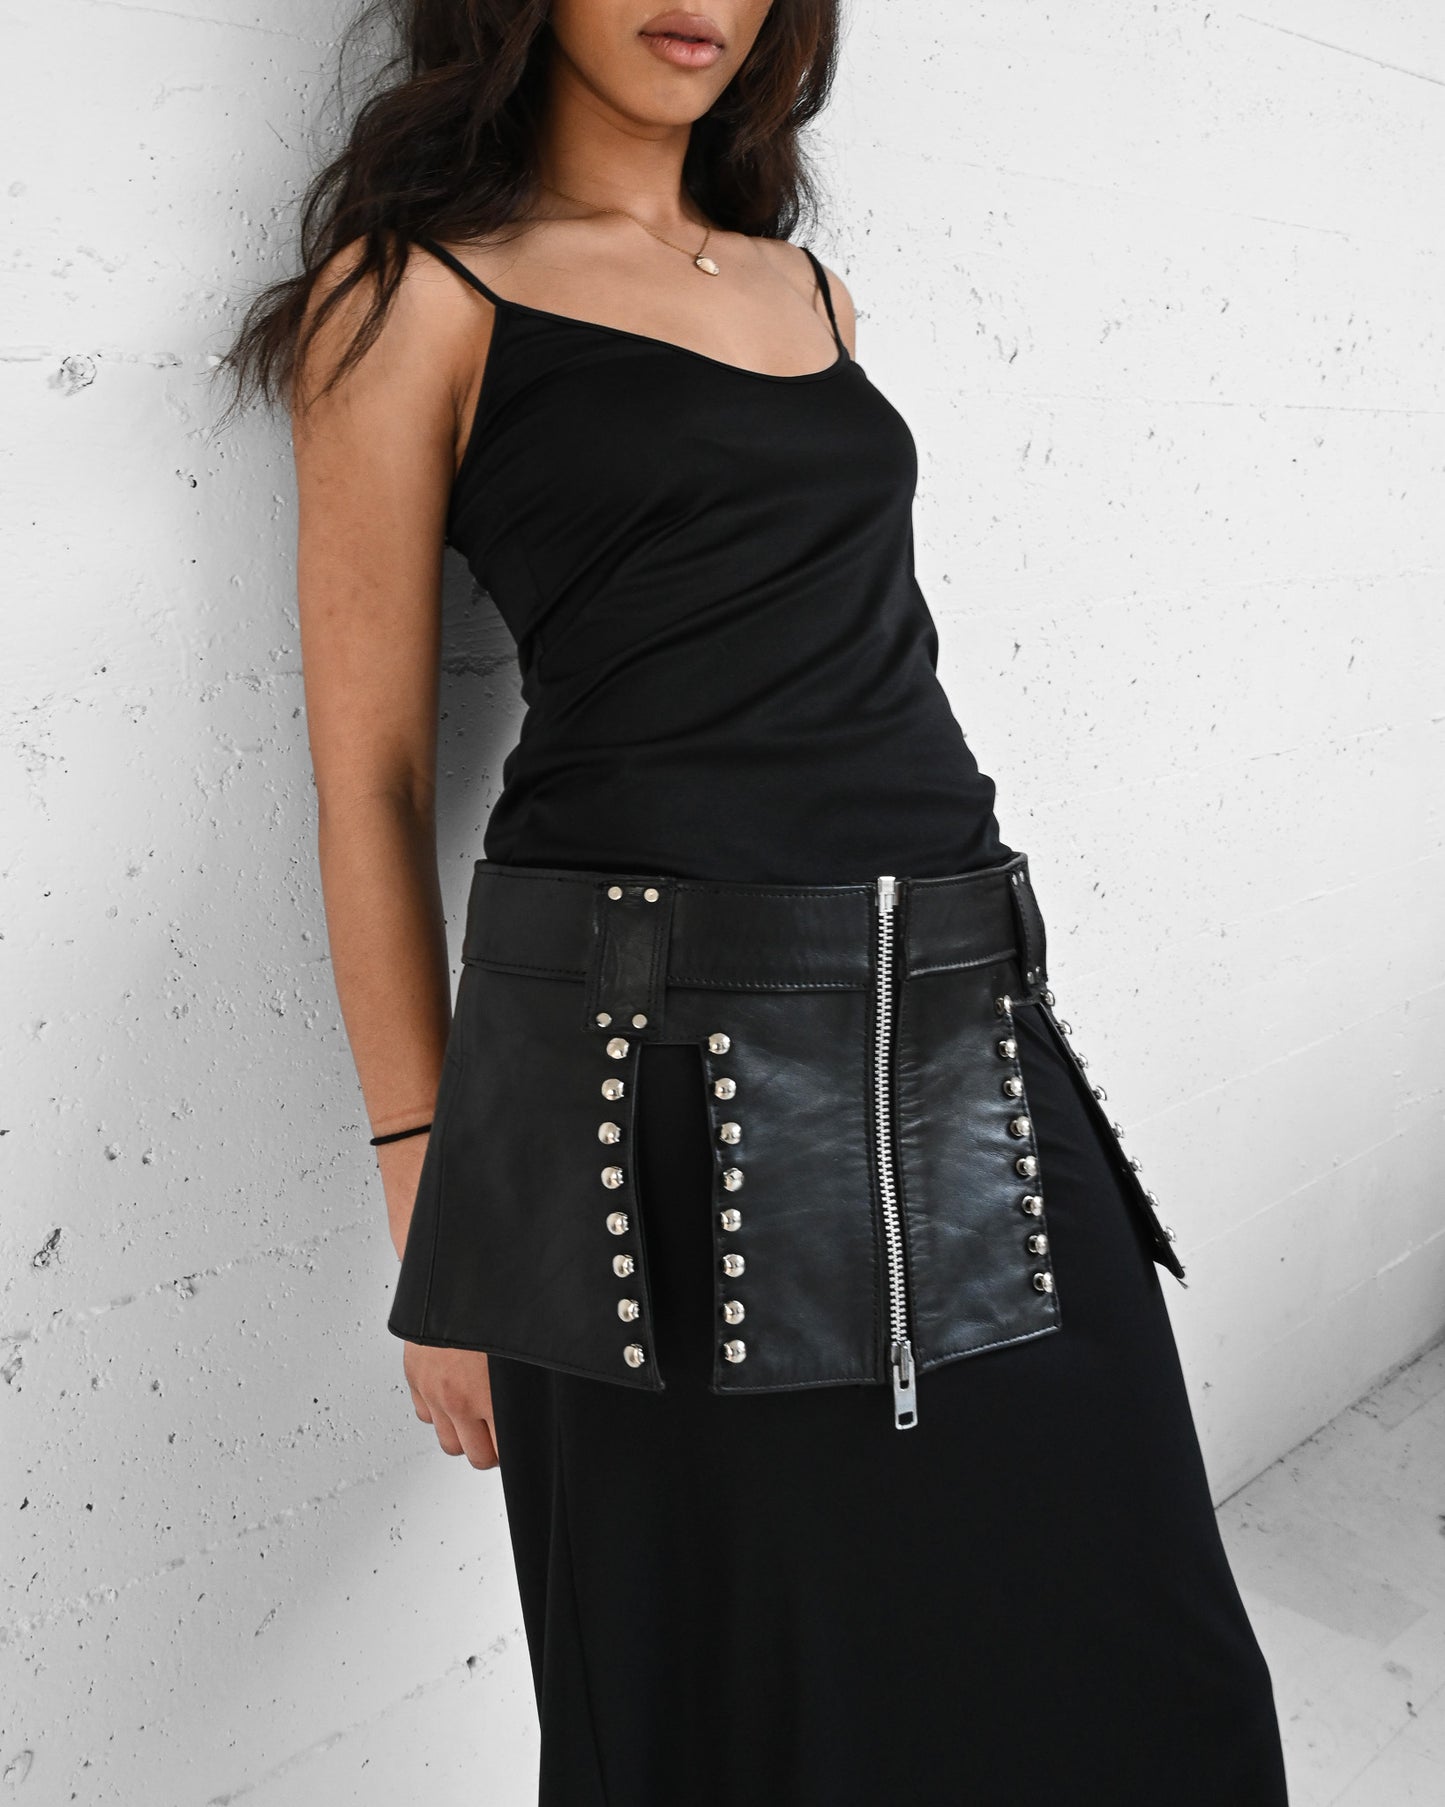 Black Leather Micro Mini Skirt (M-L)